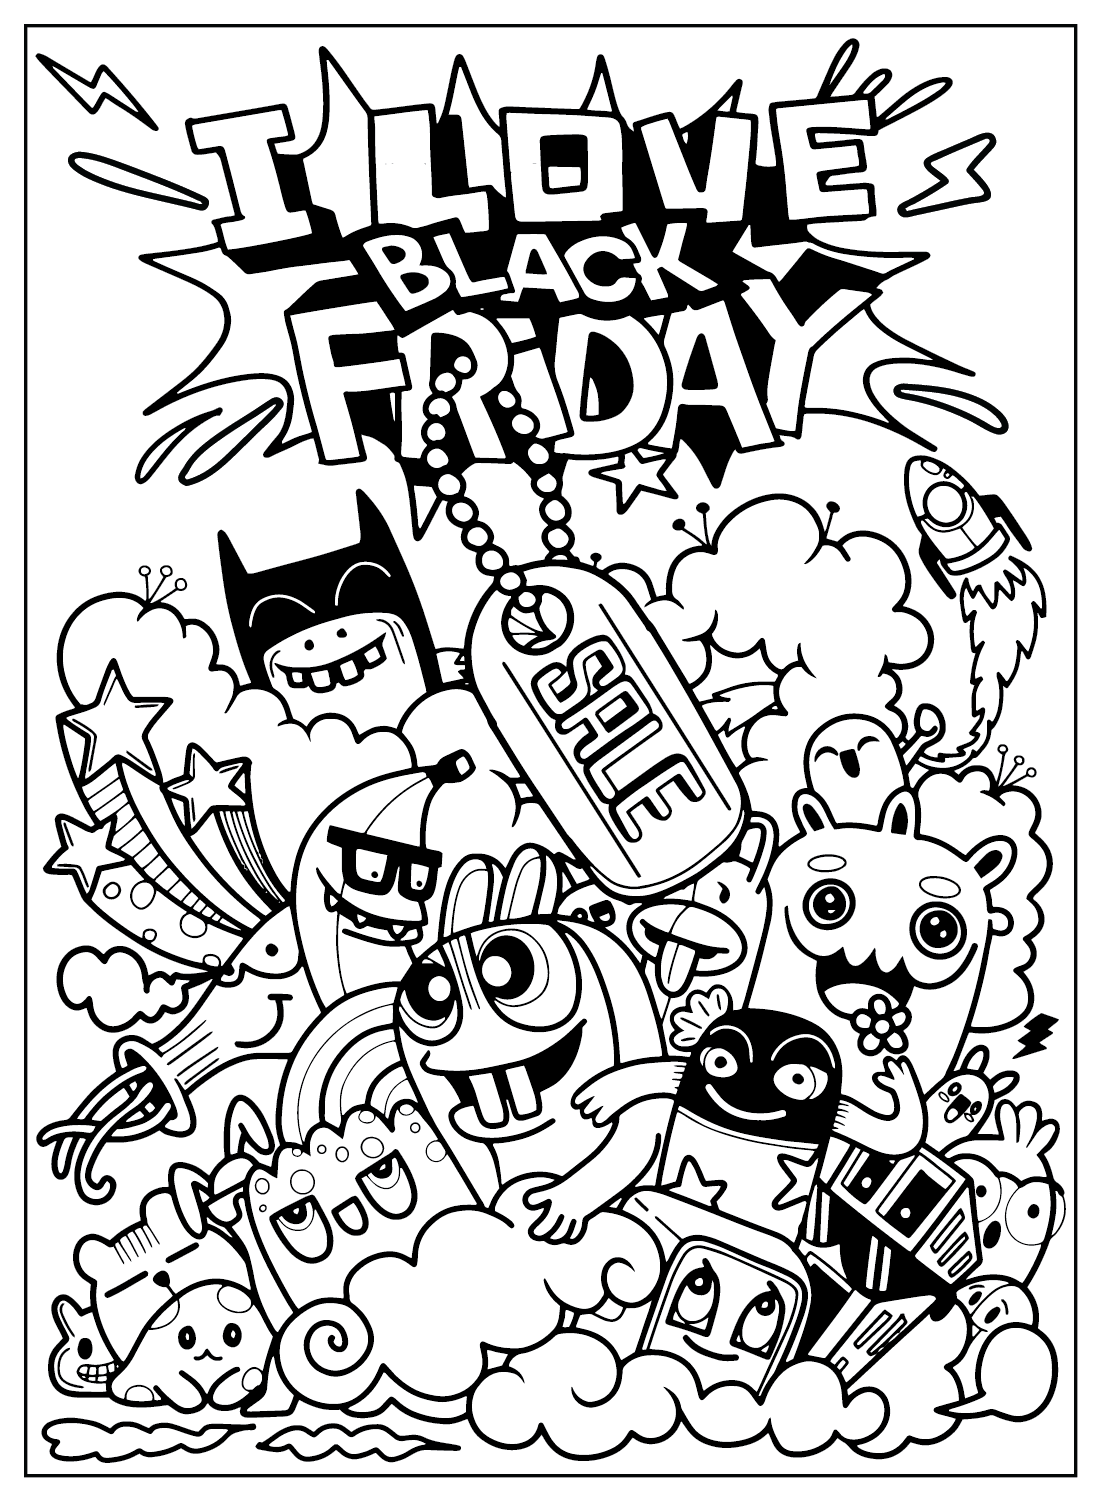 Black Friday-Farbseite vom Black Friday